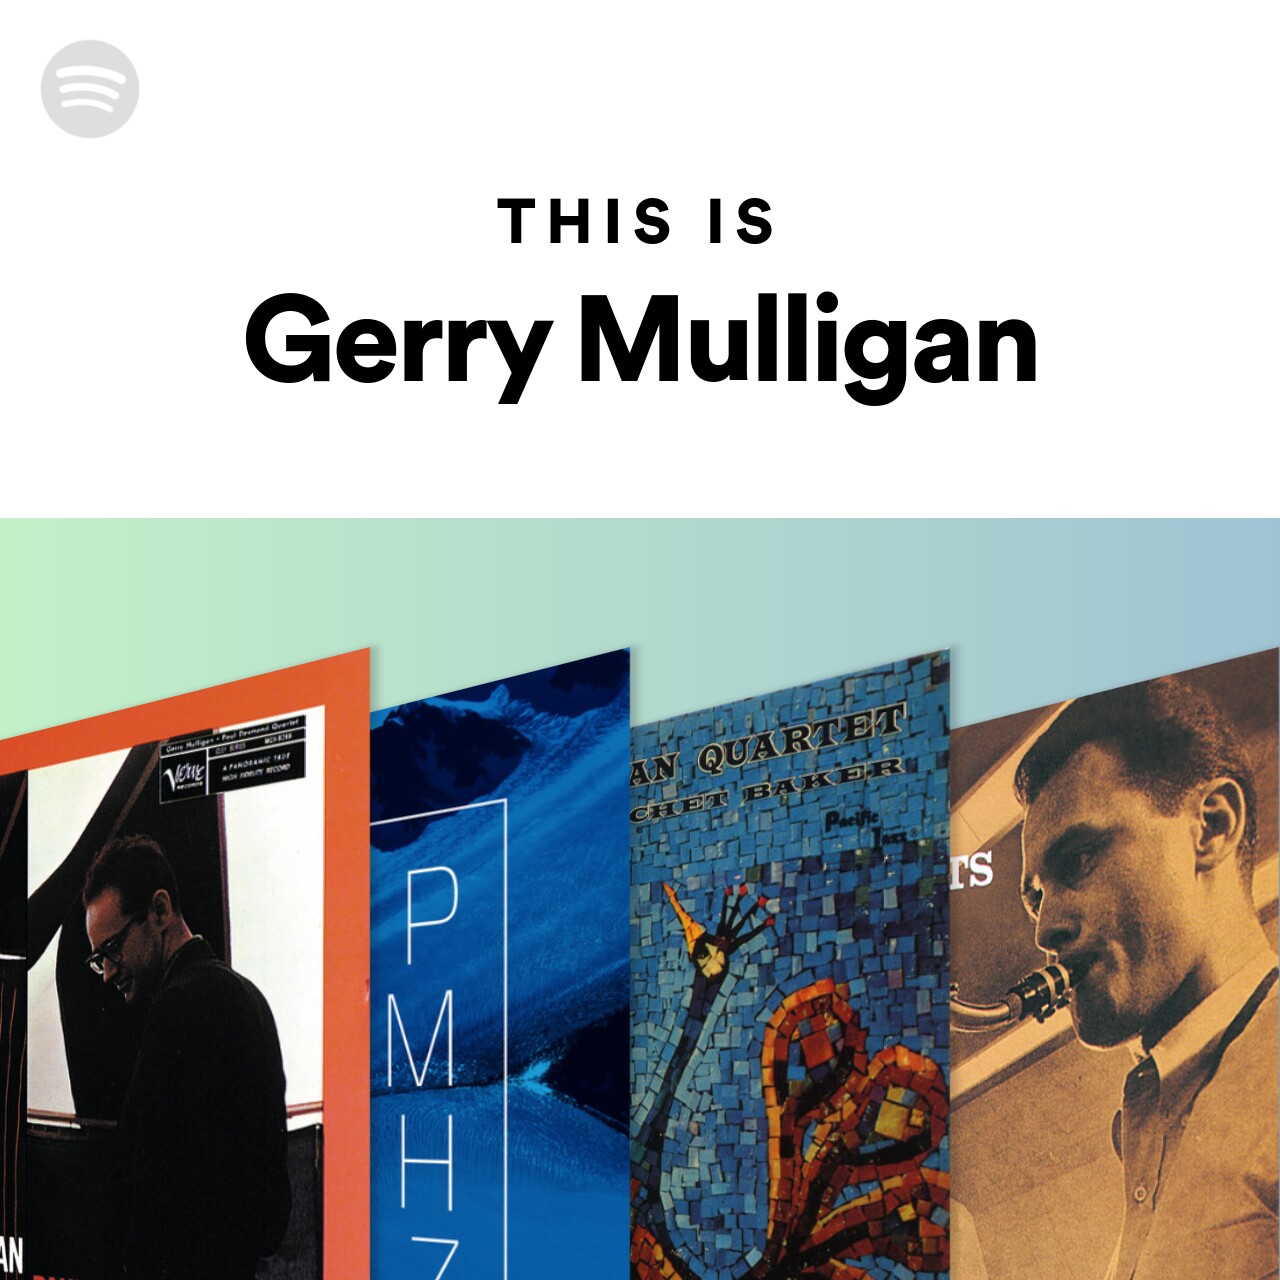 This is Gerry Mulligan